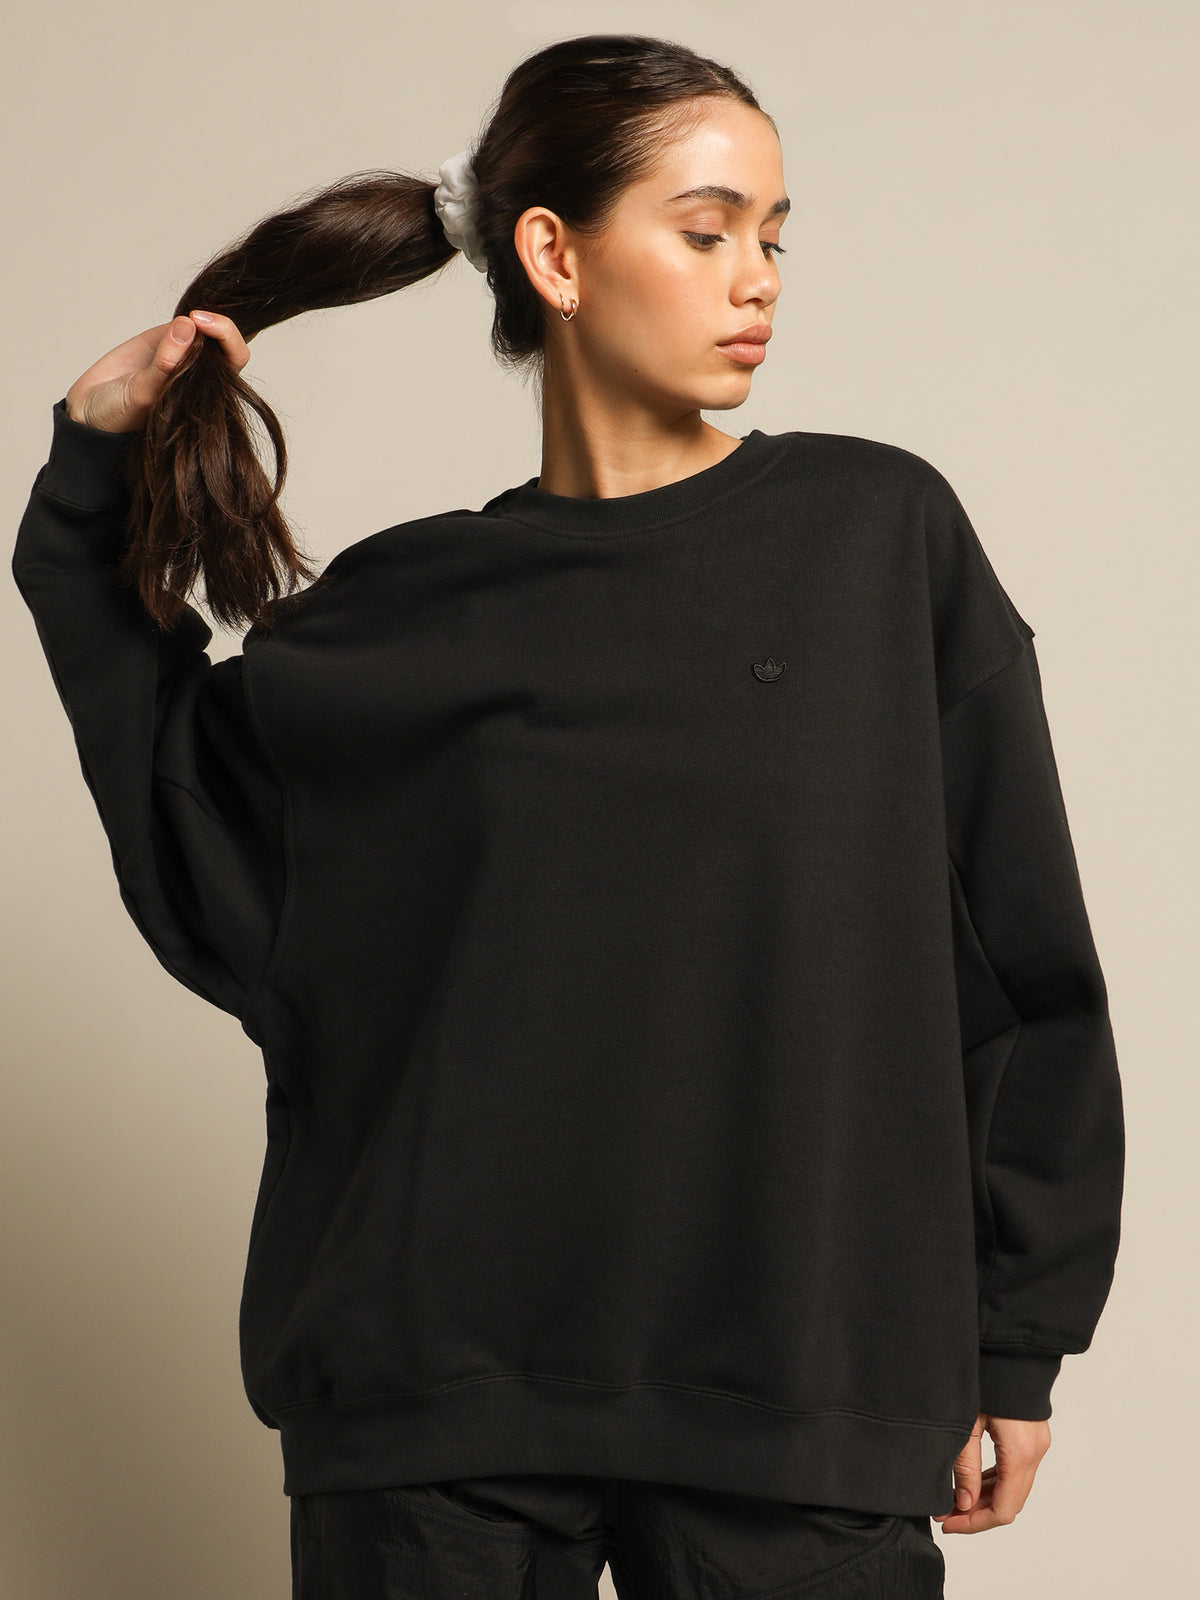 Adicolour Oversized Sweatshirt in Black